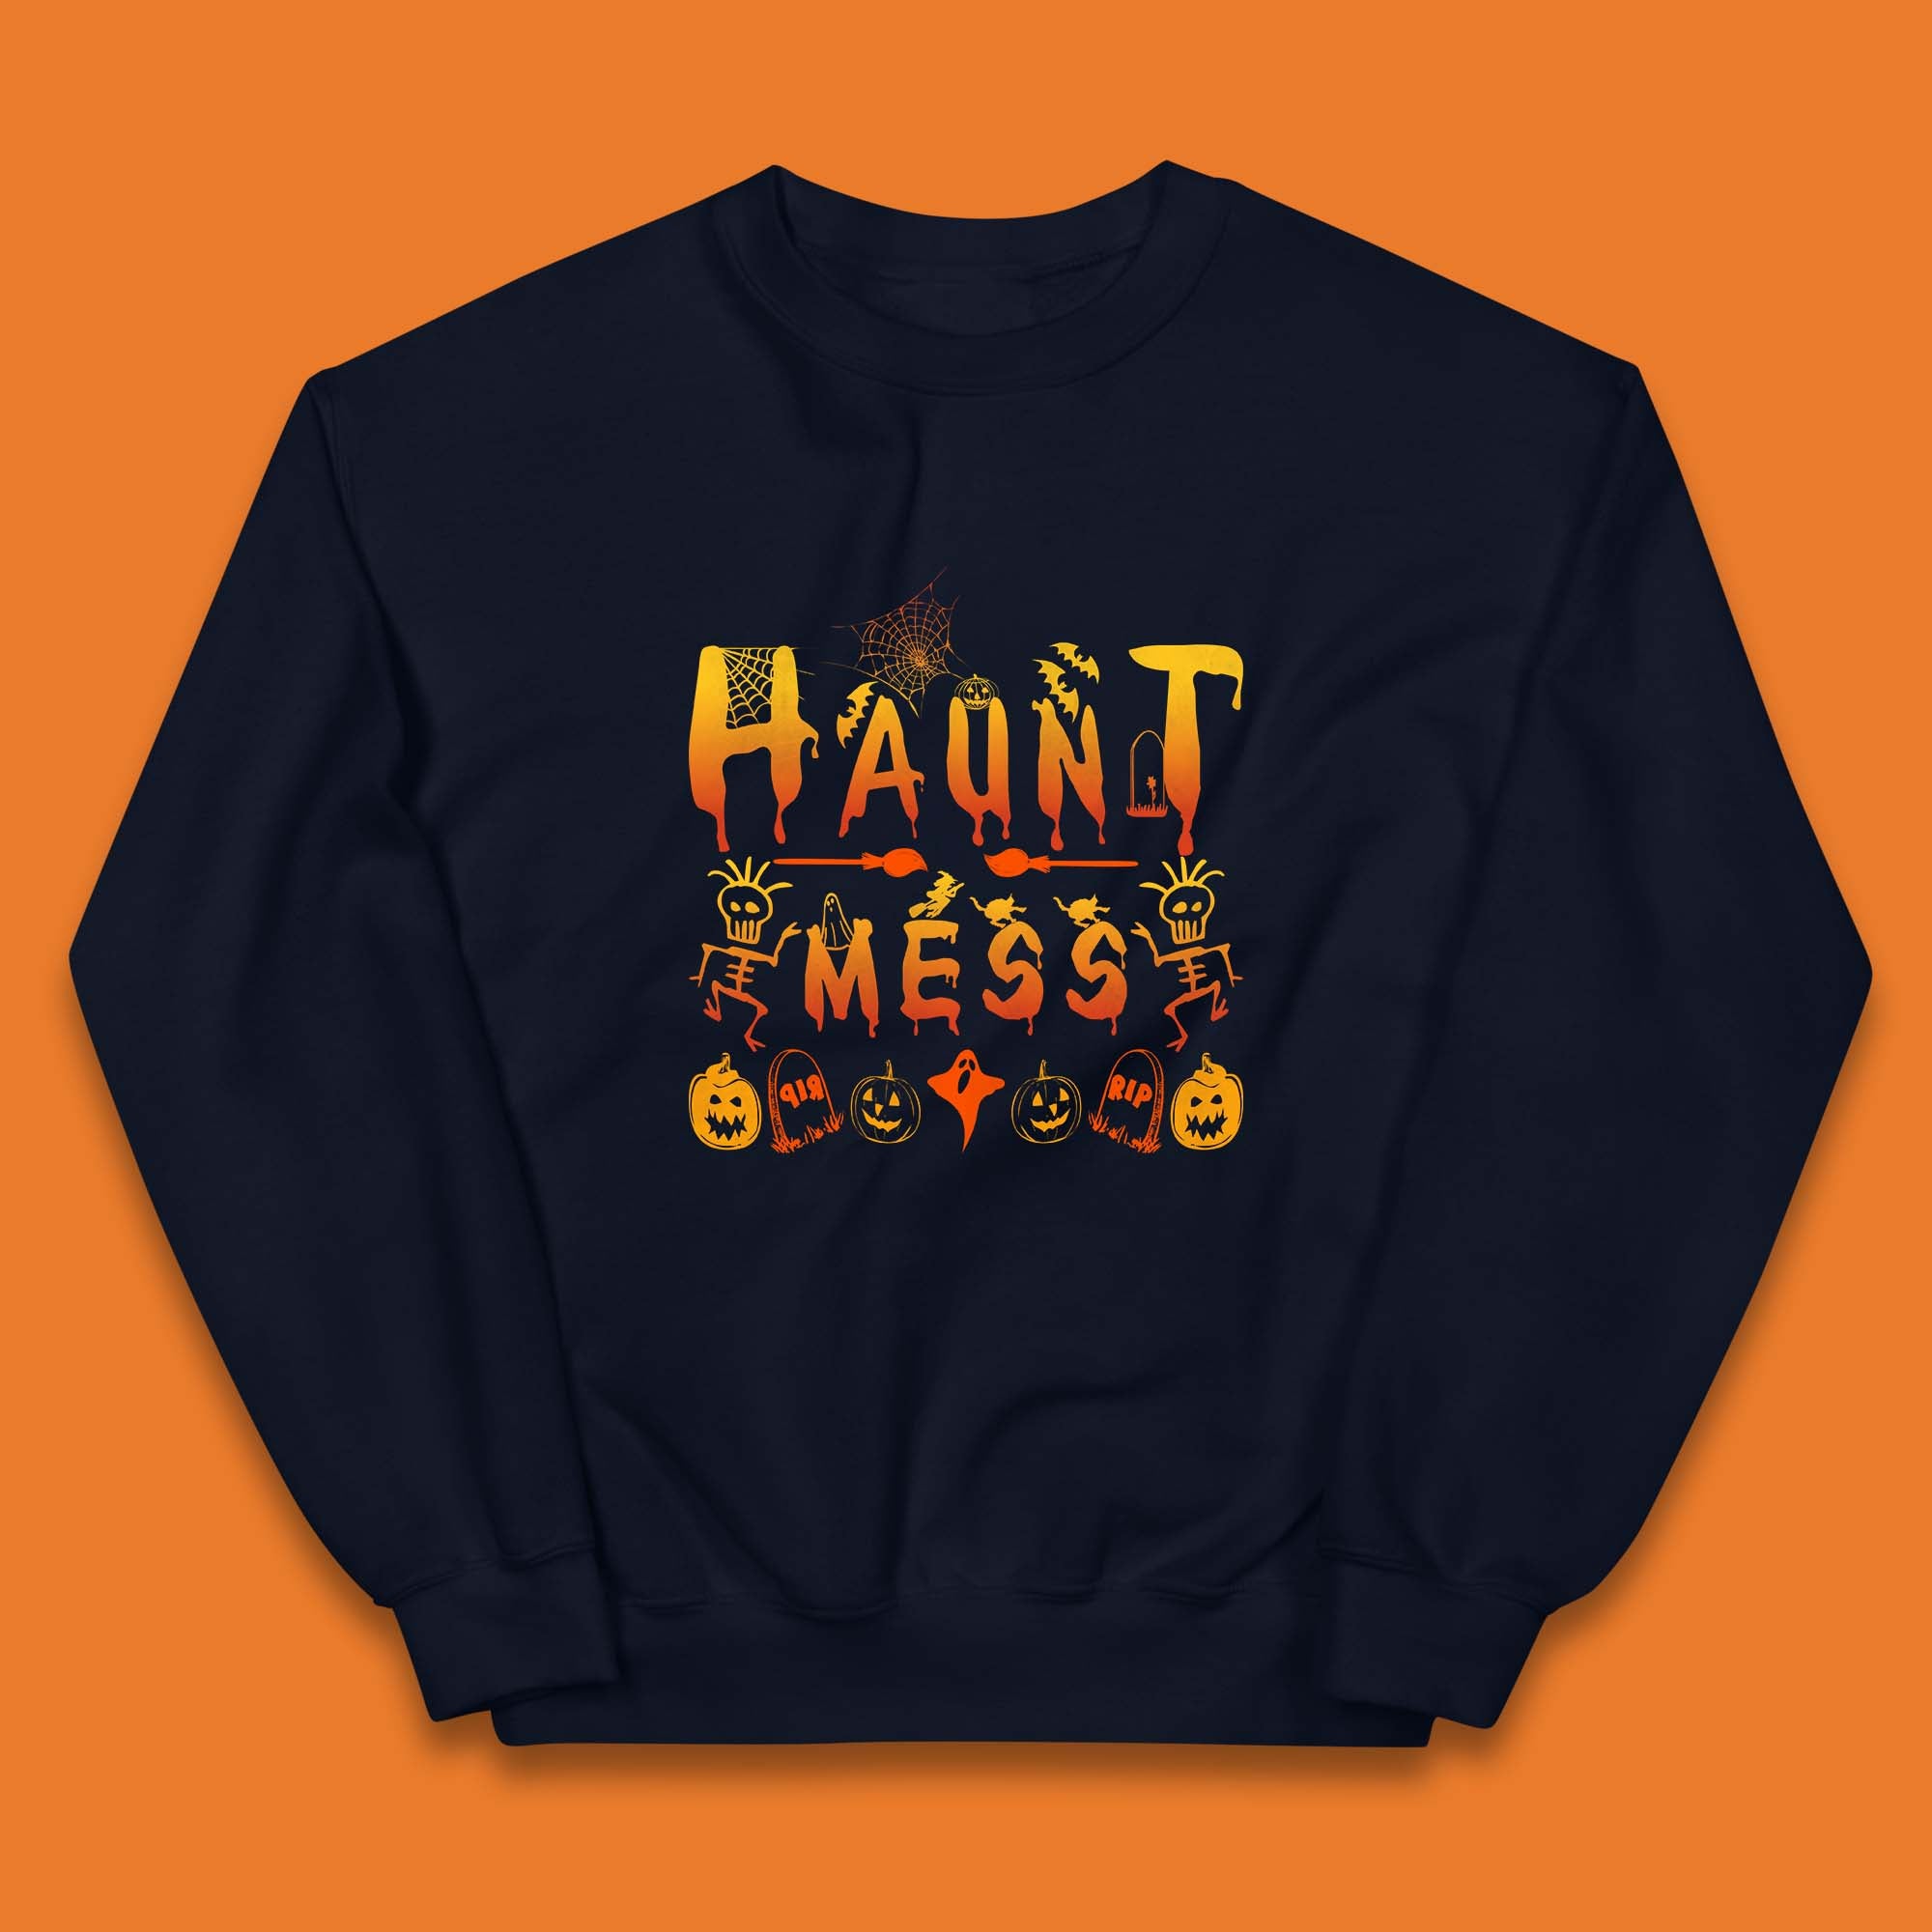 Haunt Mess Halloween Ghost Horror Scary Spooky Ghost Costume Kids Jumper